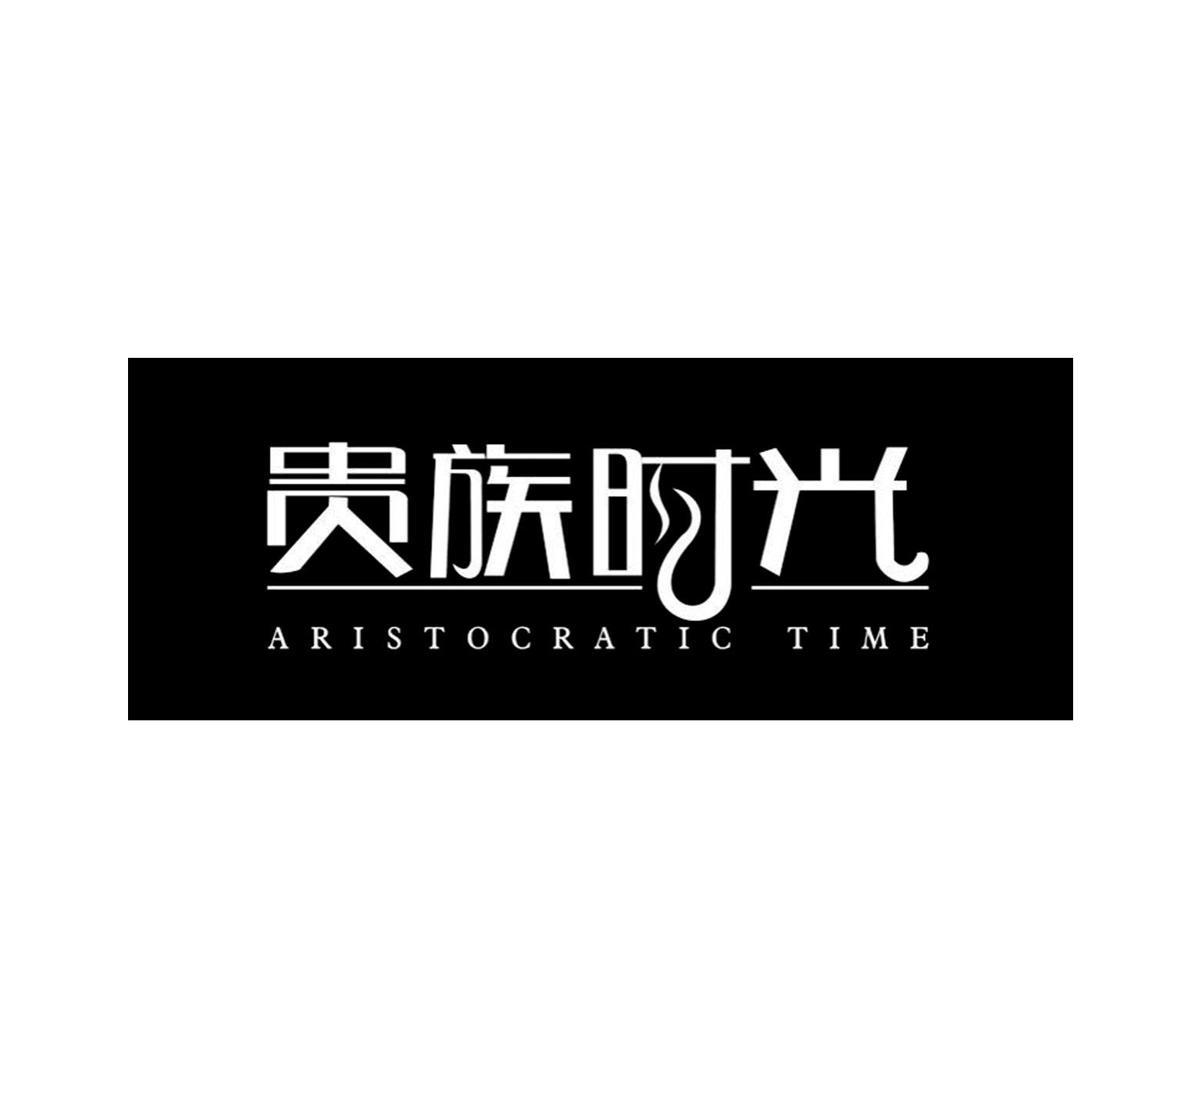 42类-网站服务贵族时光 ARISTOCRATIC TIME商标转让